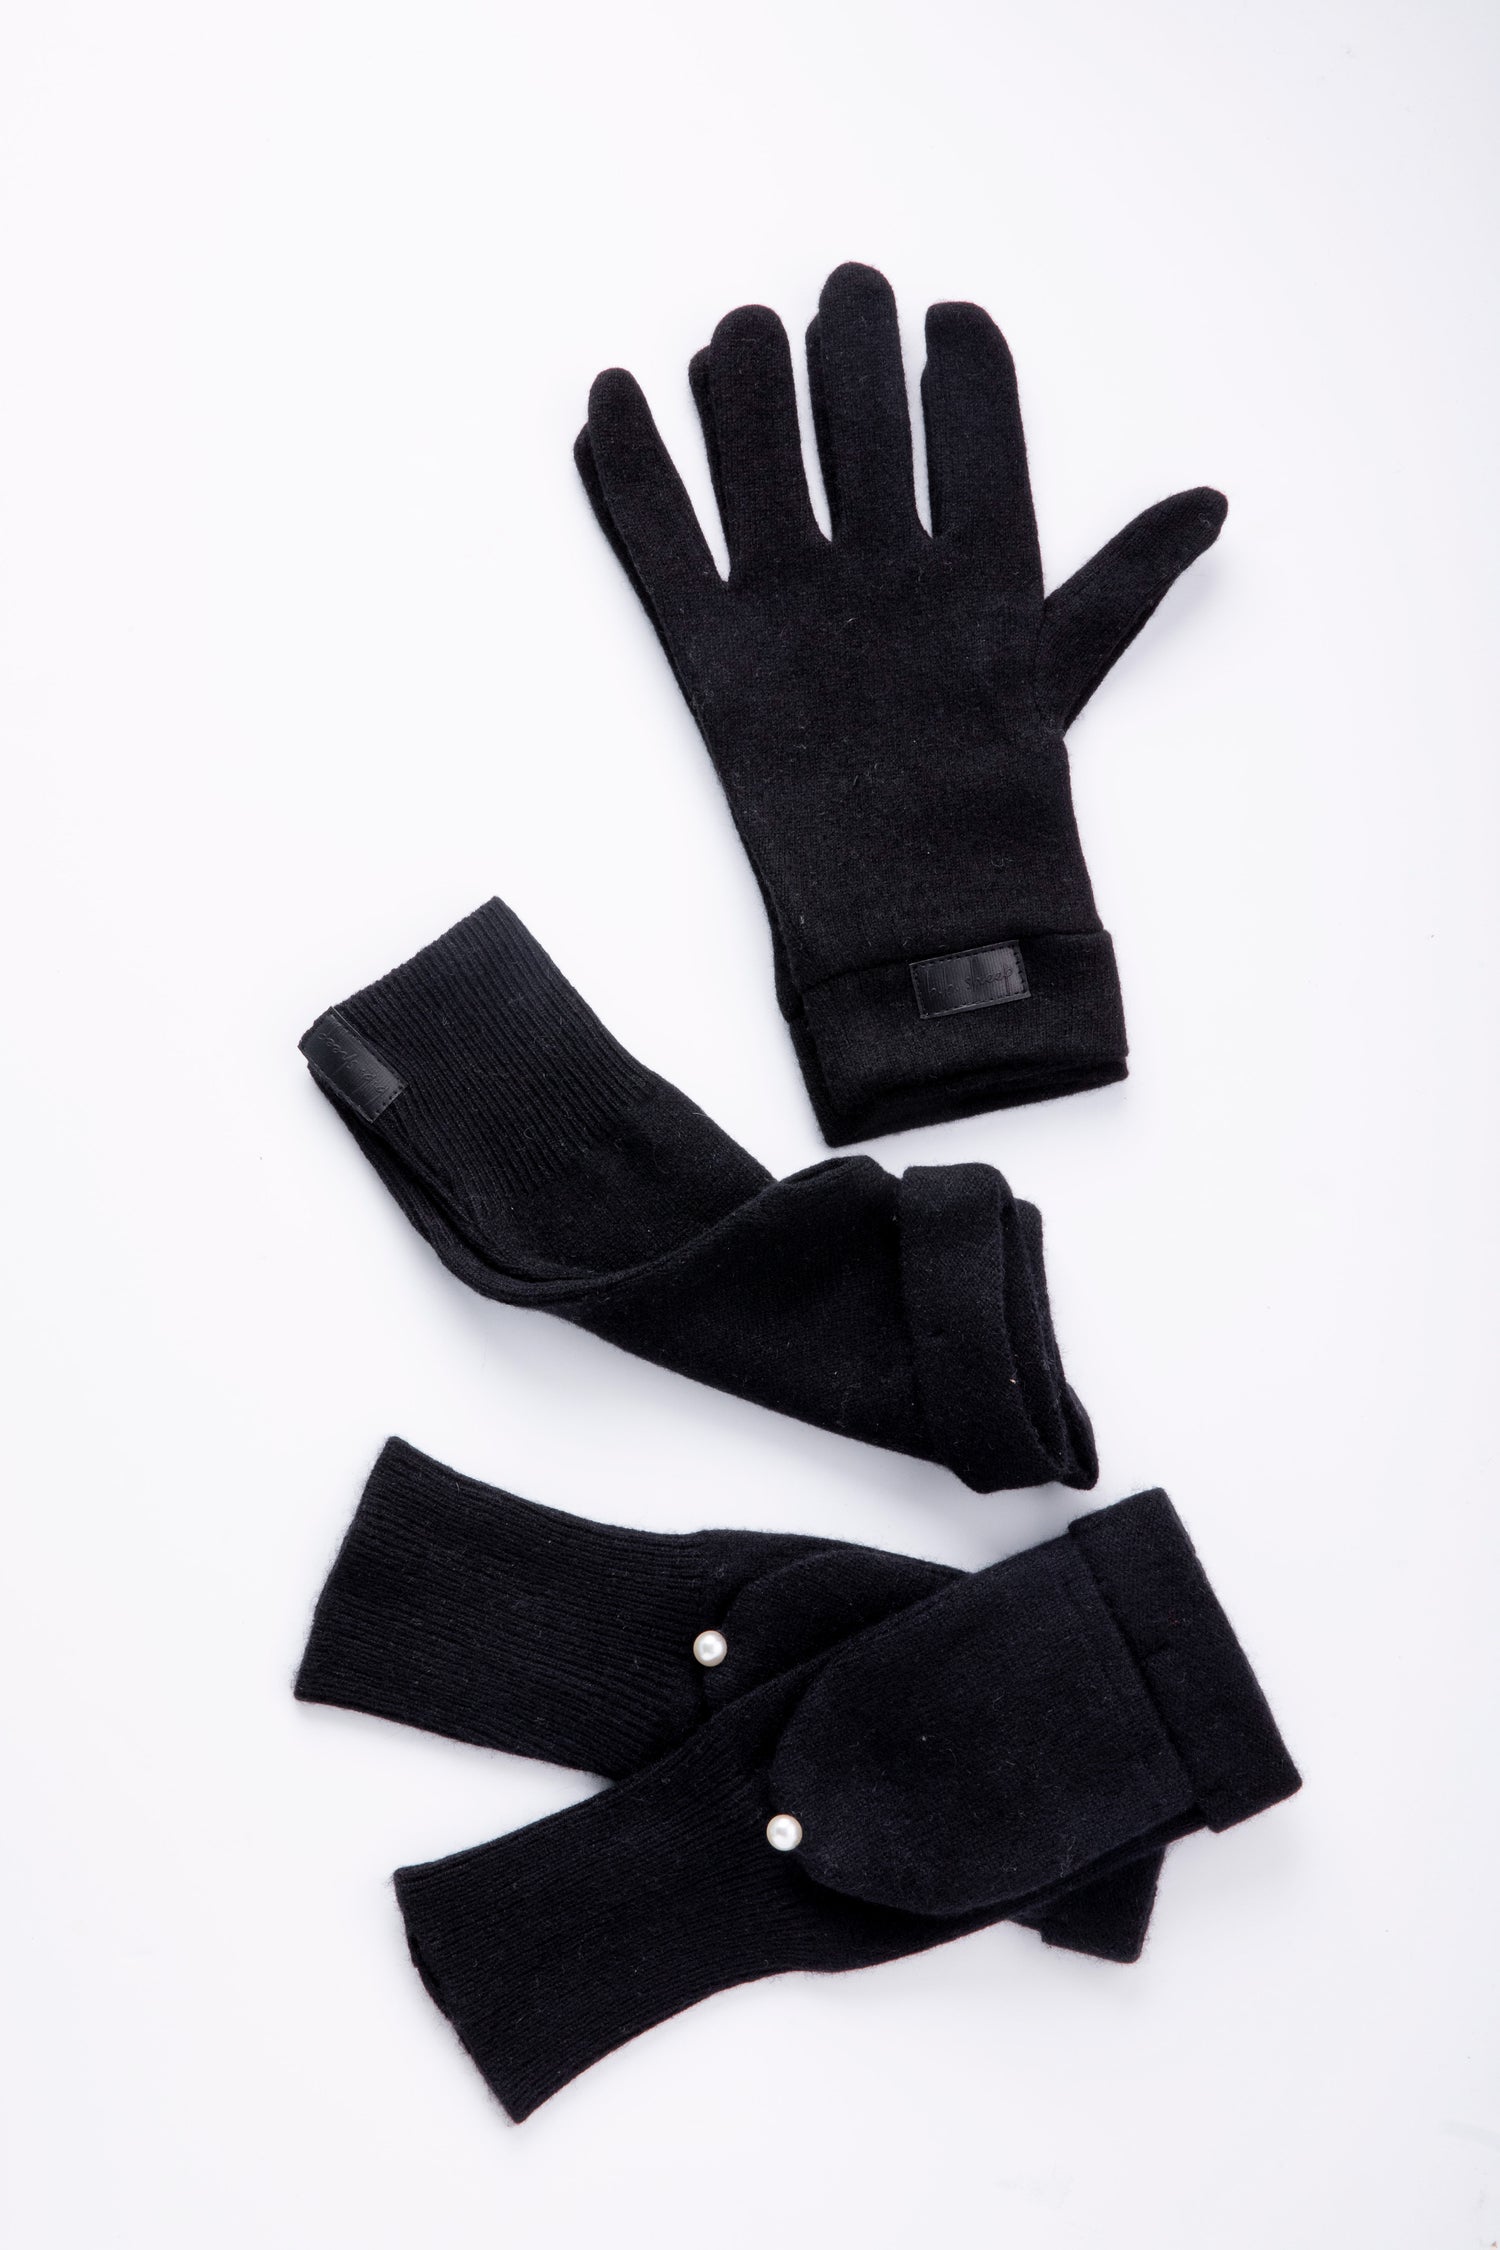 All Black Assorted Gloves Set - Black - Box of 3